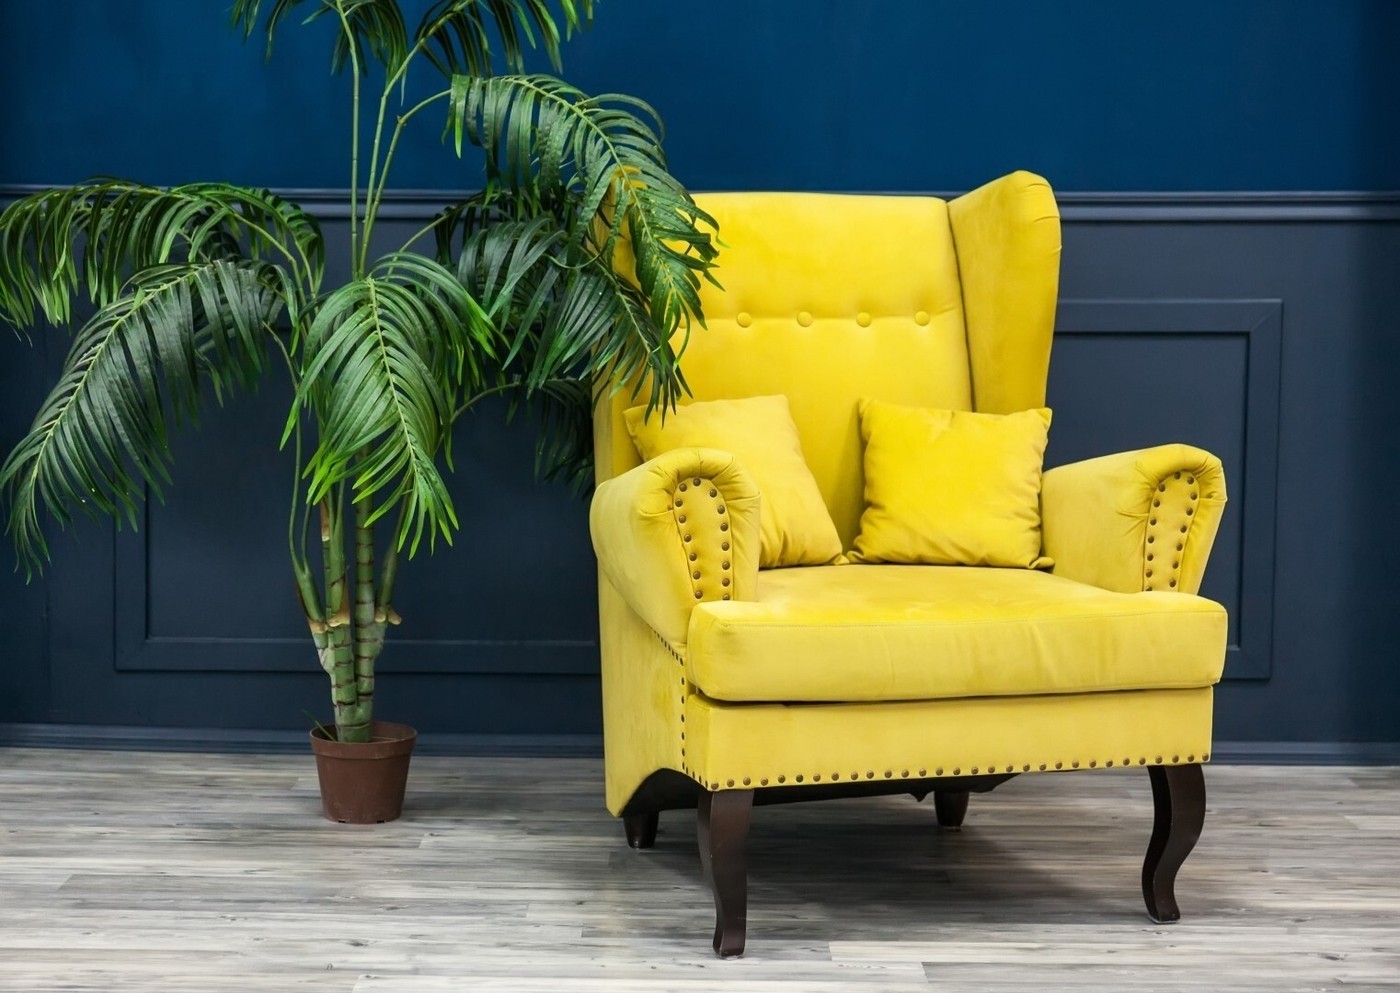 stylish-yellow-chair.jpg